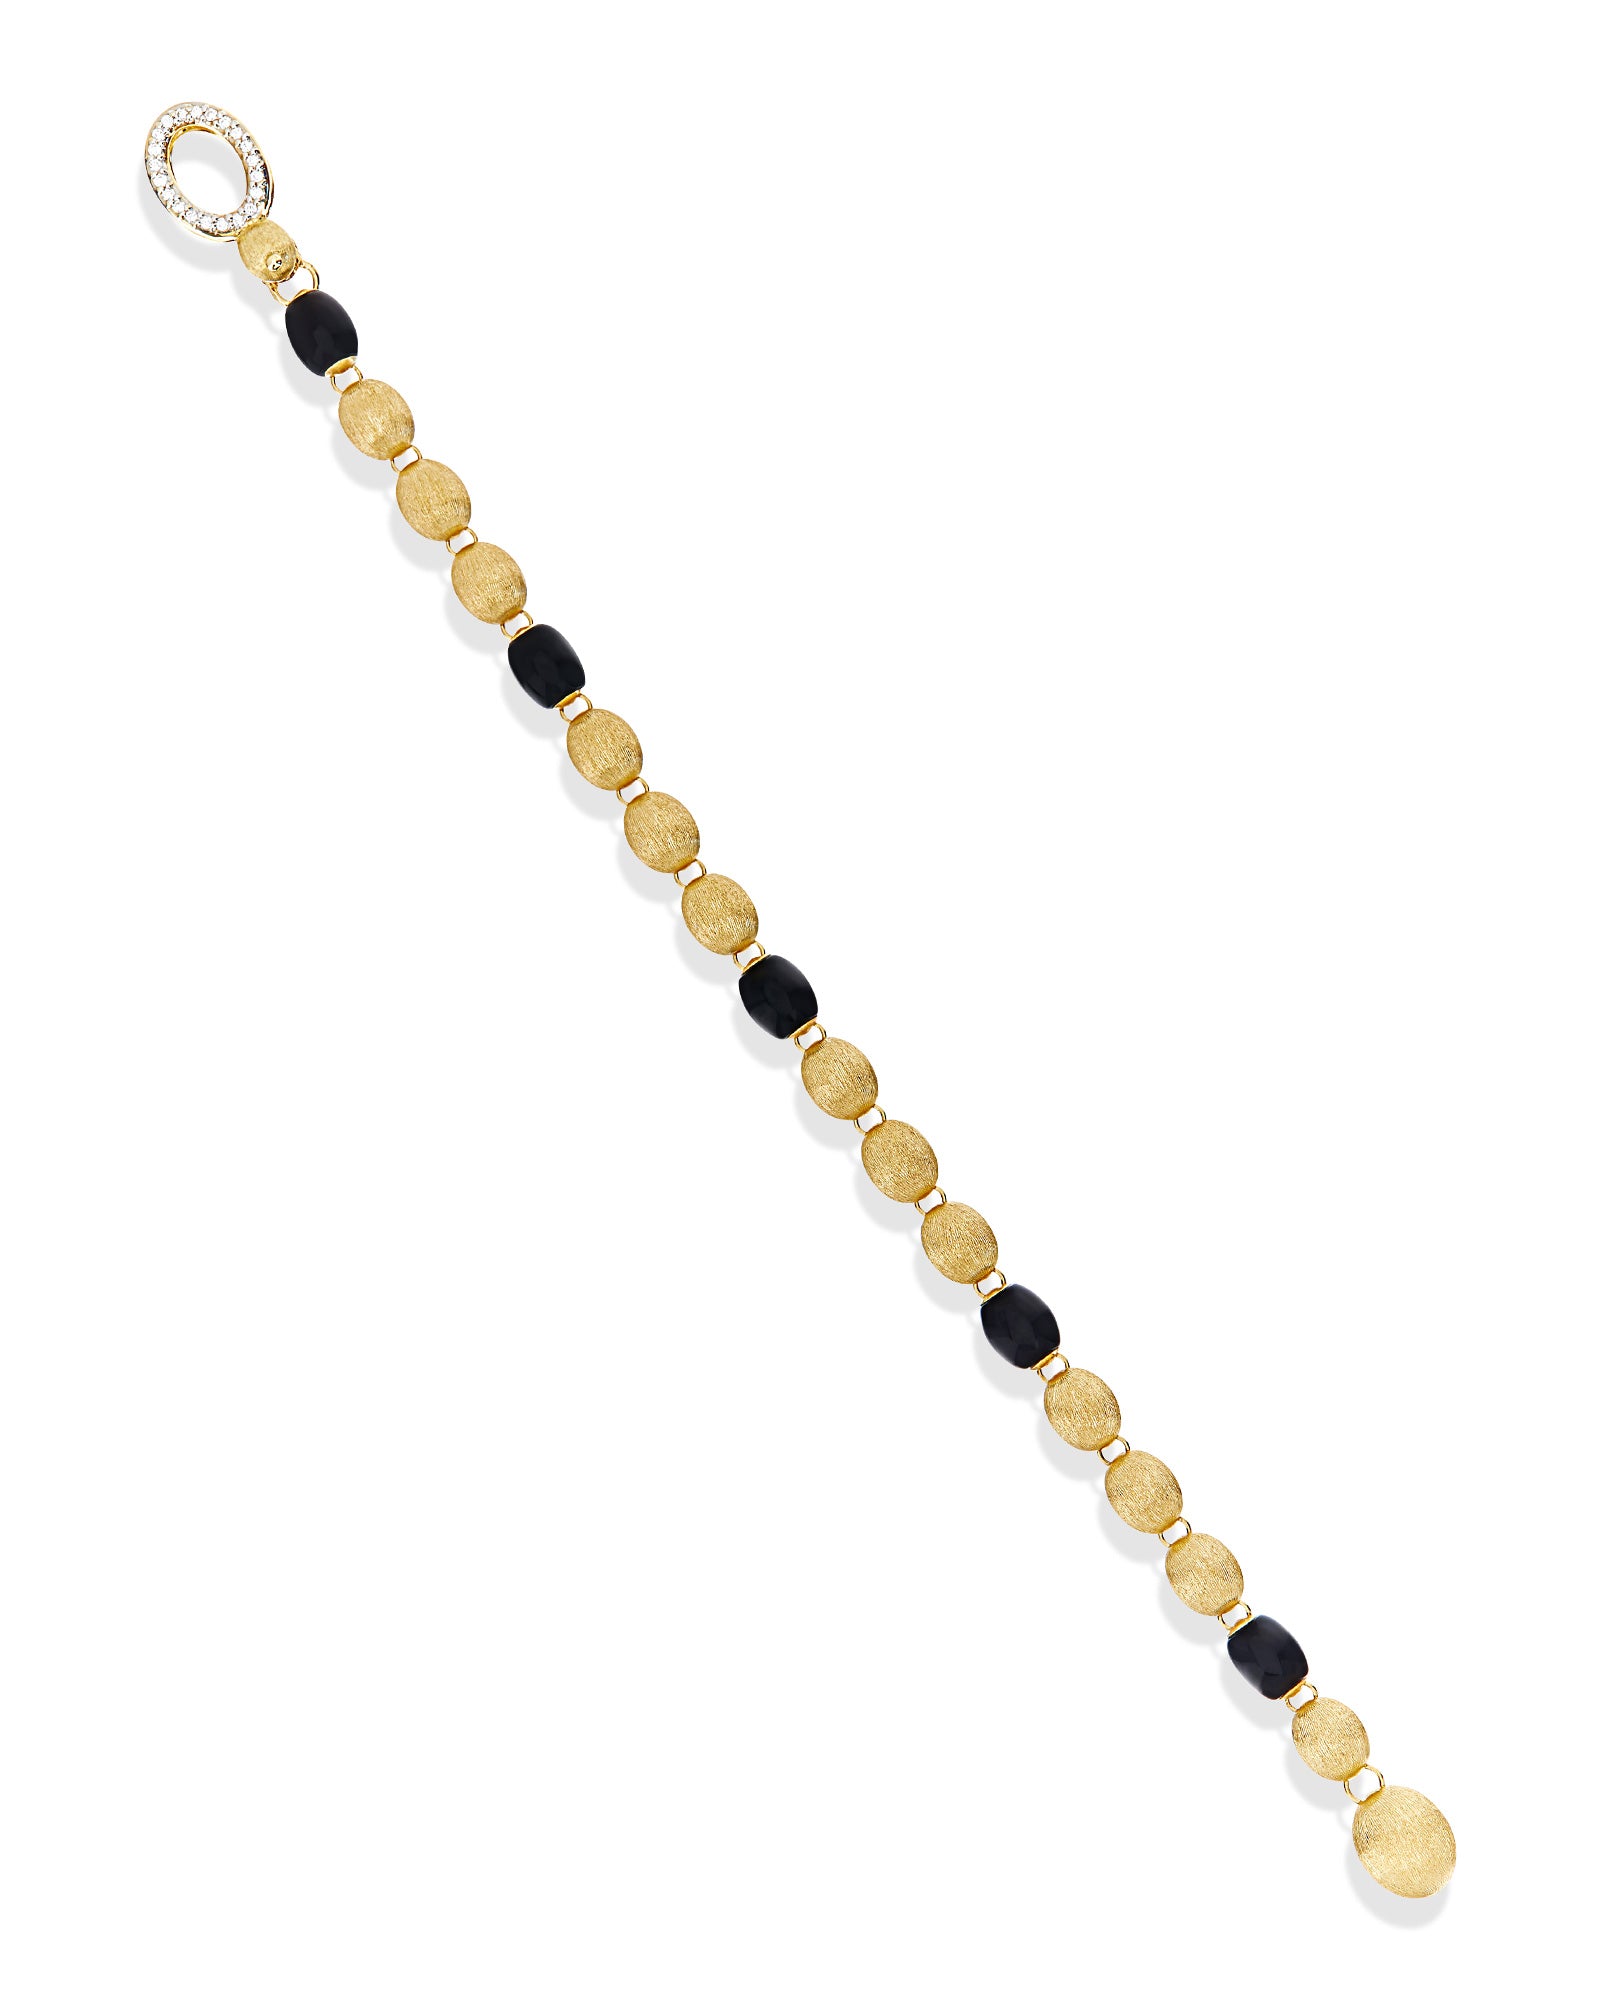 "IVY" Gold bracelet with Black Onyx boules and diamonds